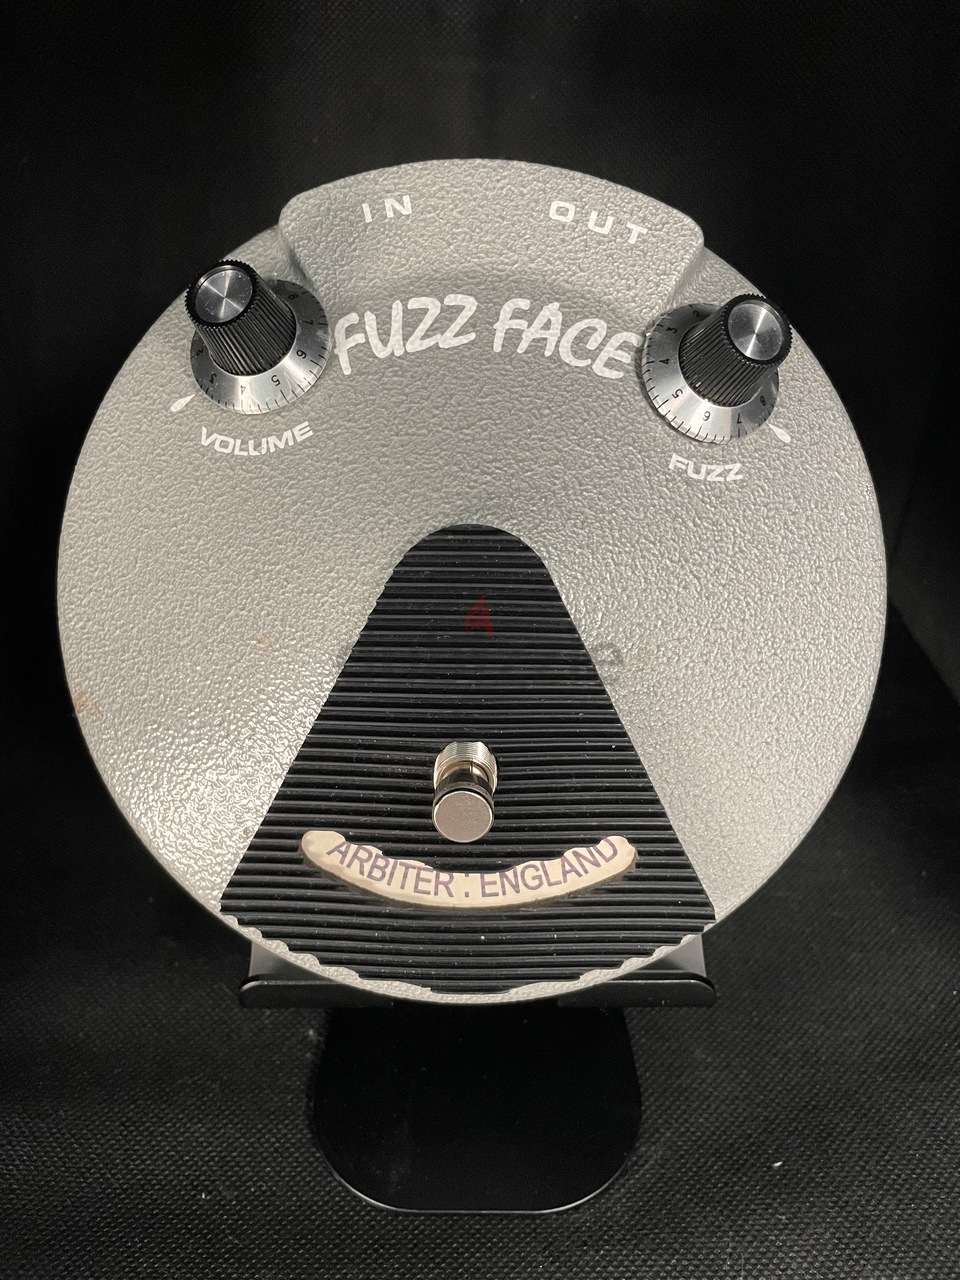 Rare Fuzz Face Arbiter England by Dennis Cornell - Vintage Tone Bliss! |  dubizzle